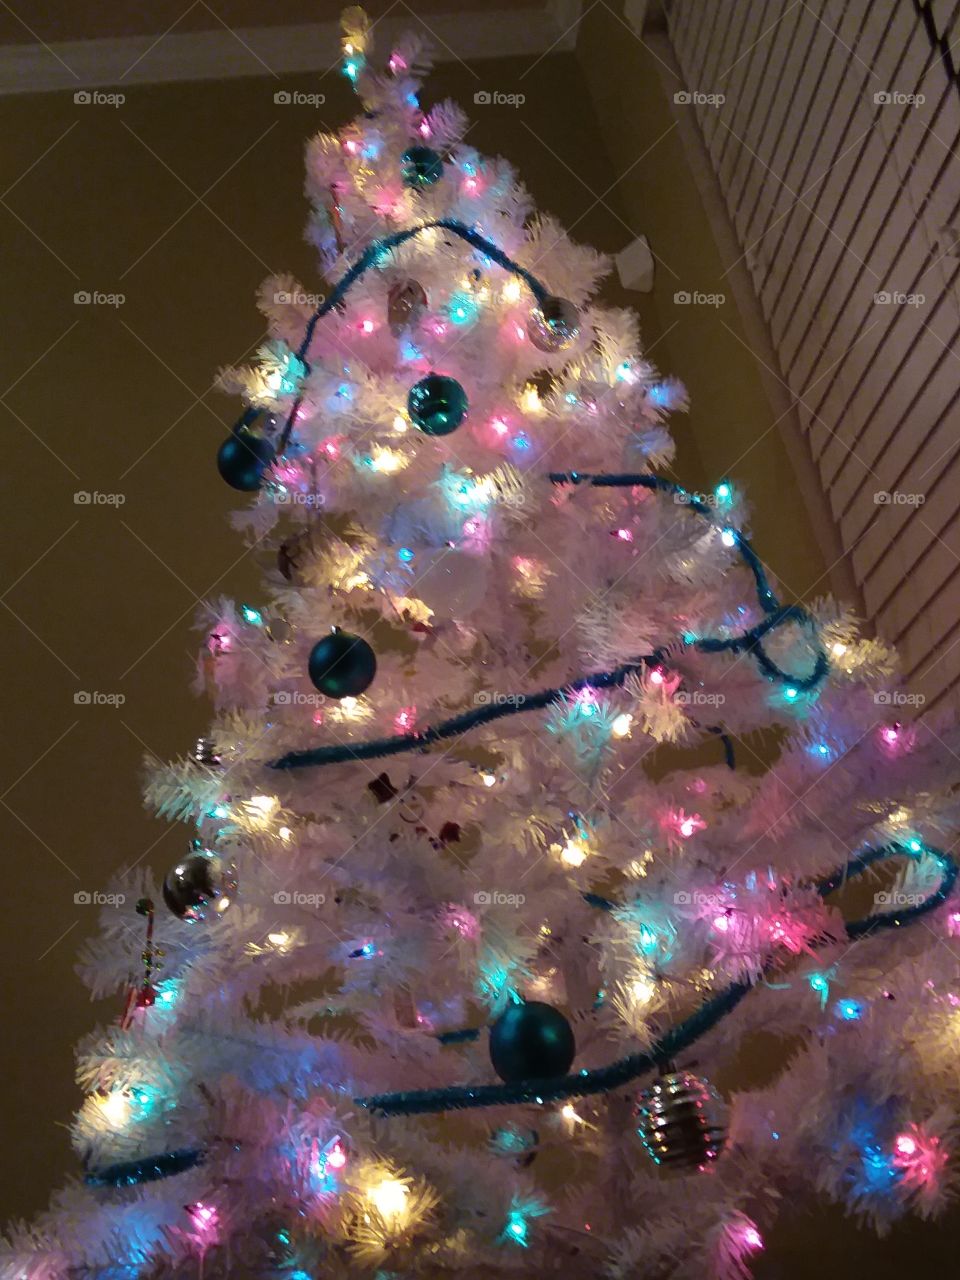 kid's eye view Christmas tree